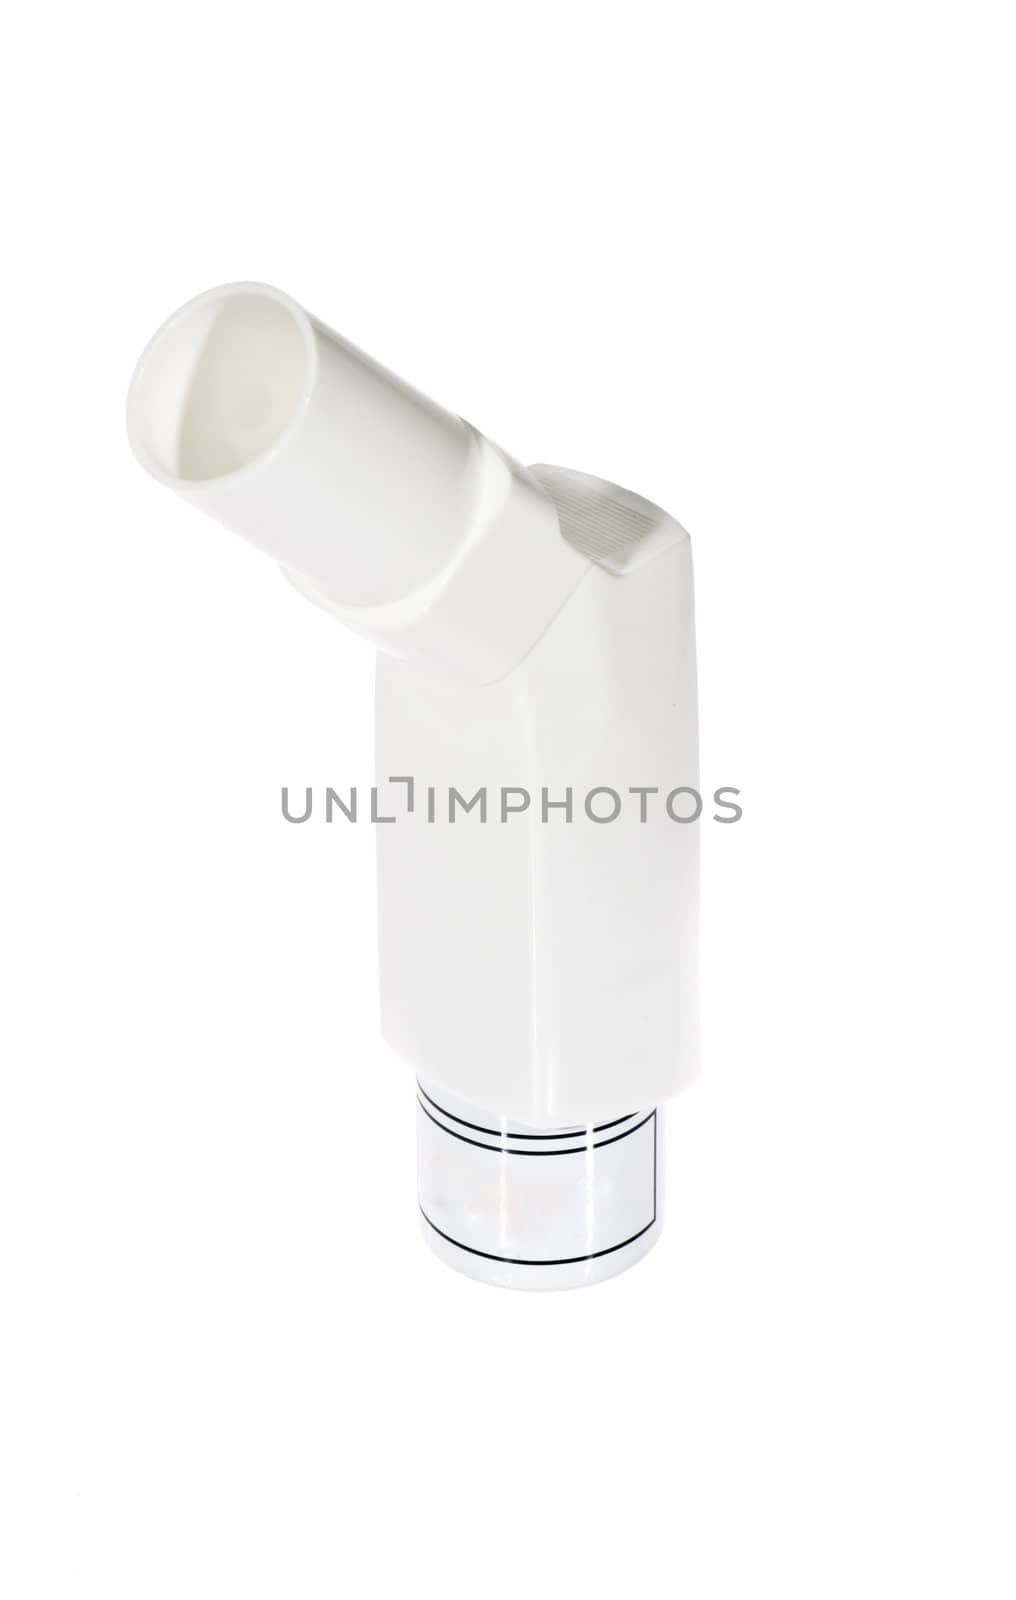 Asthma inhaler, photo on the white background